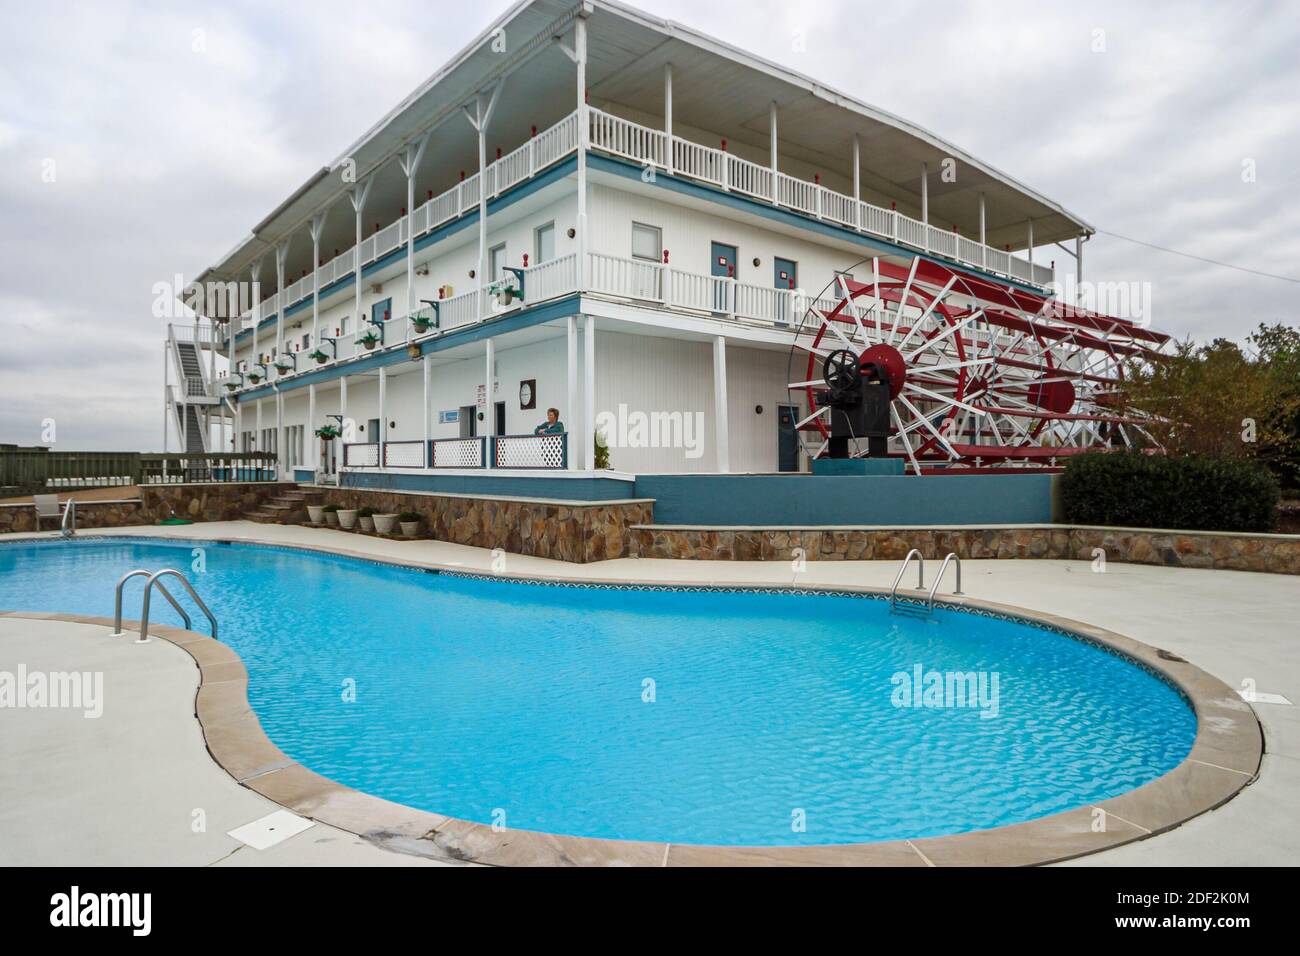 Alabama Centre Alabama Belle Resort & Condominiums,Hotel Inn B&B swimming pool,riverboat shaped building, Stock Photo